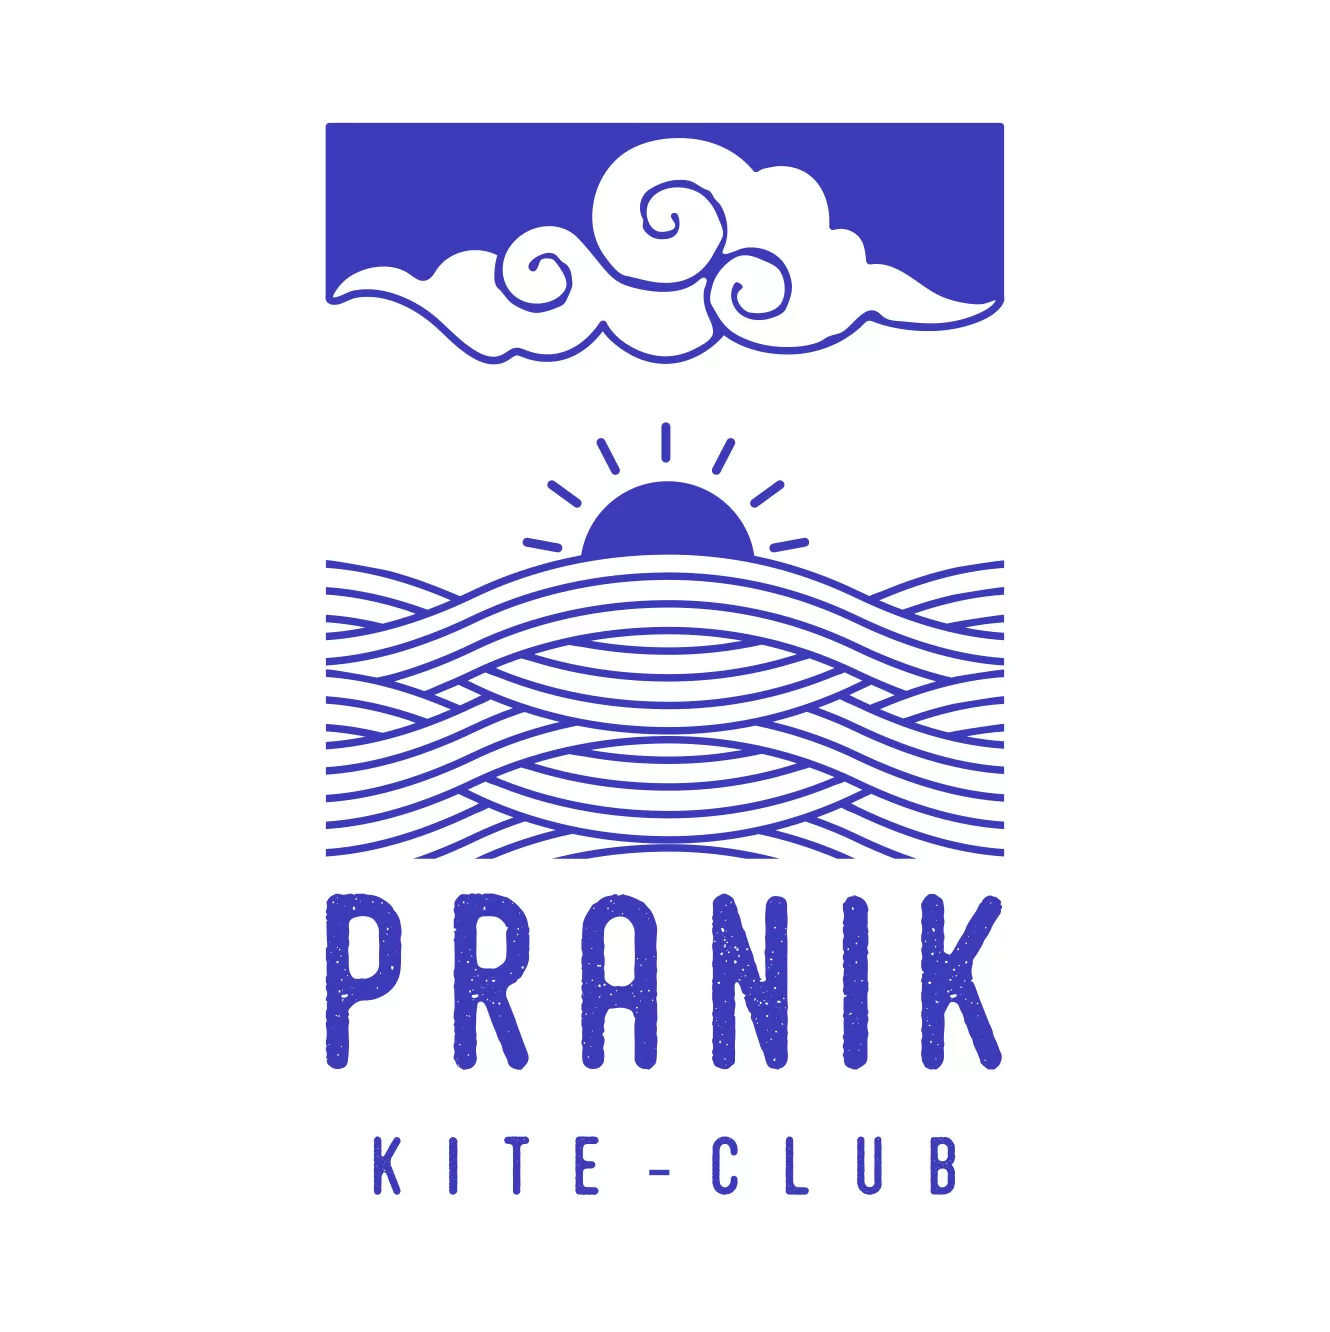 Pranik Kite Club